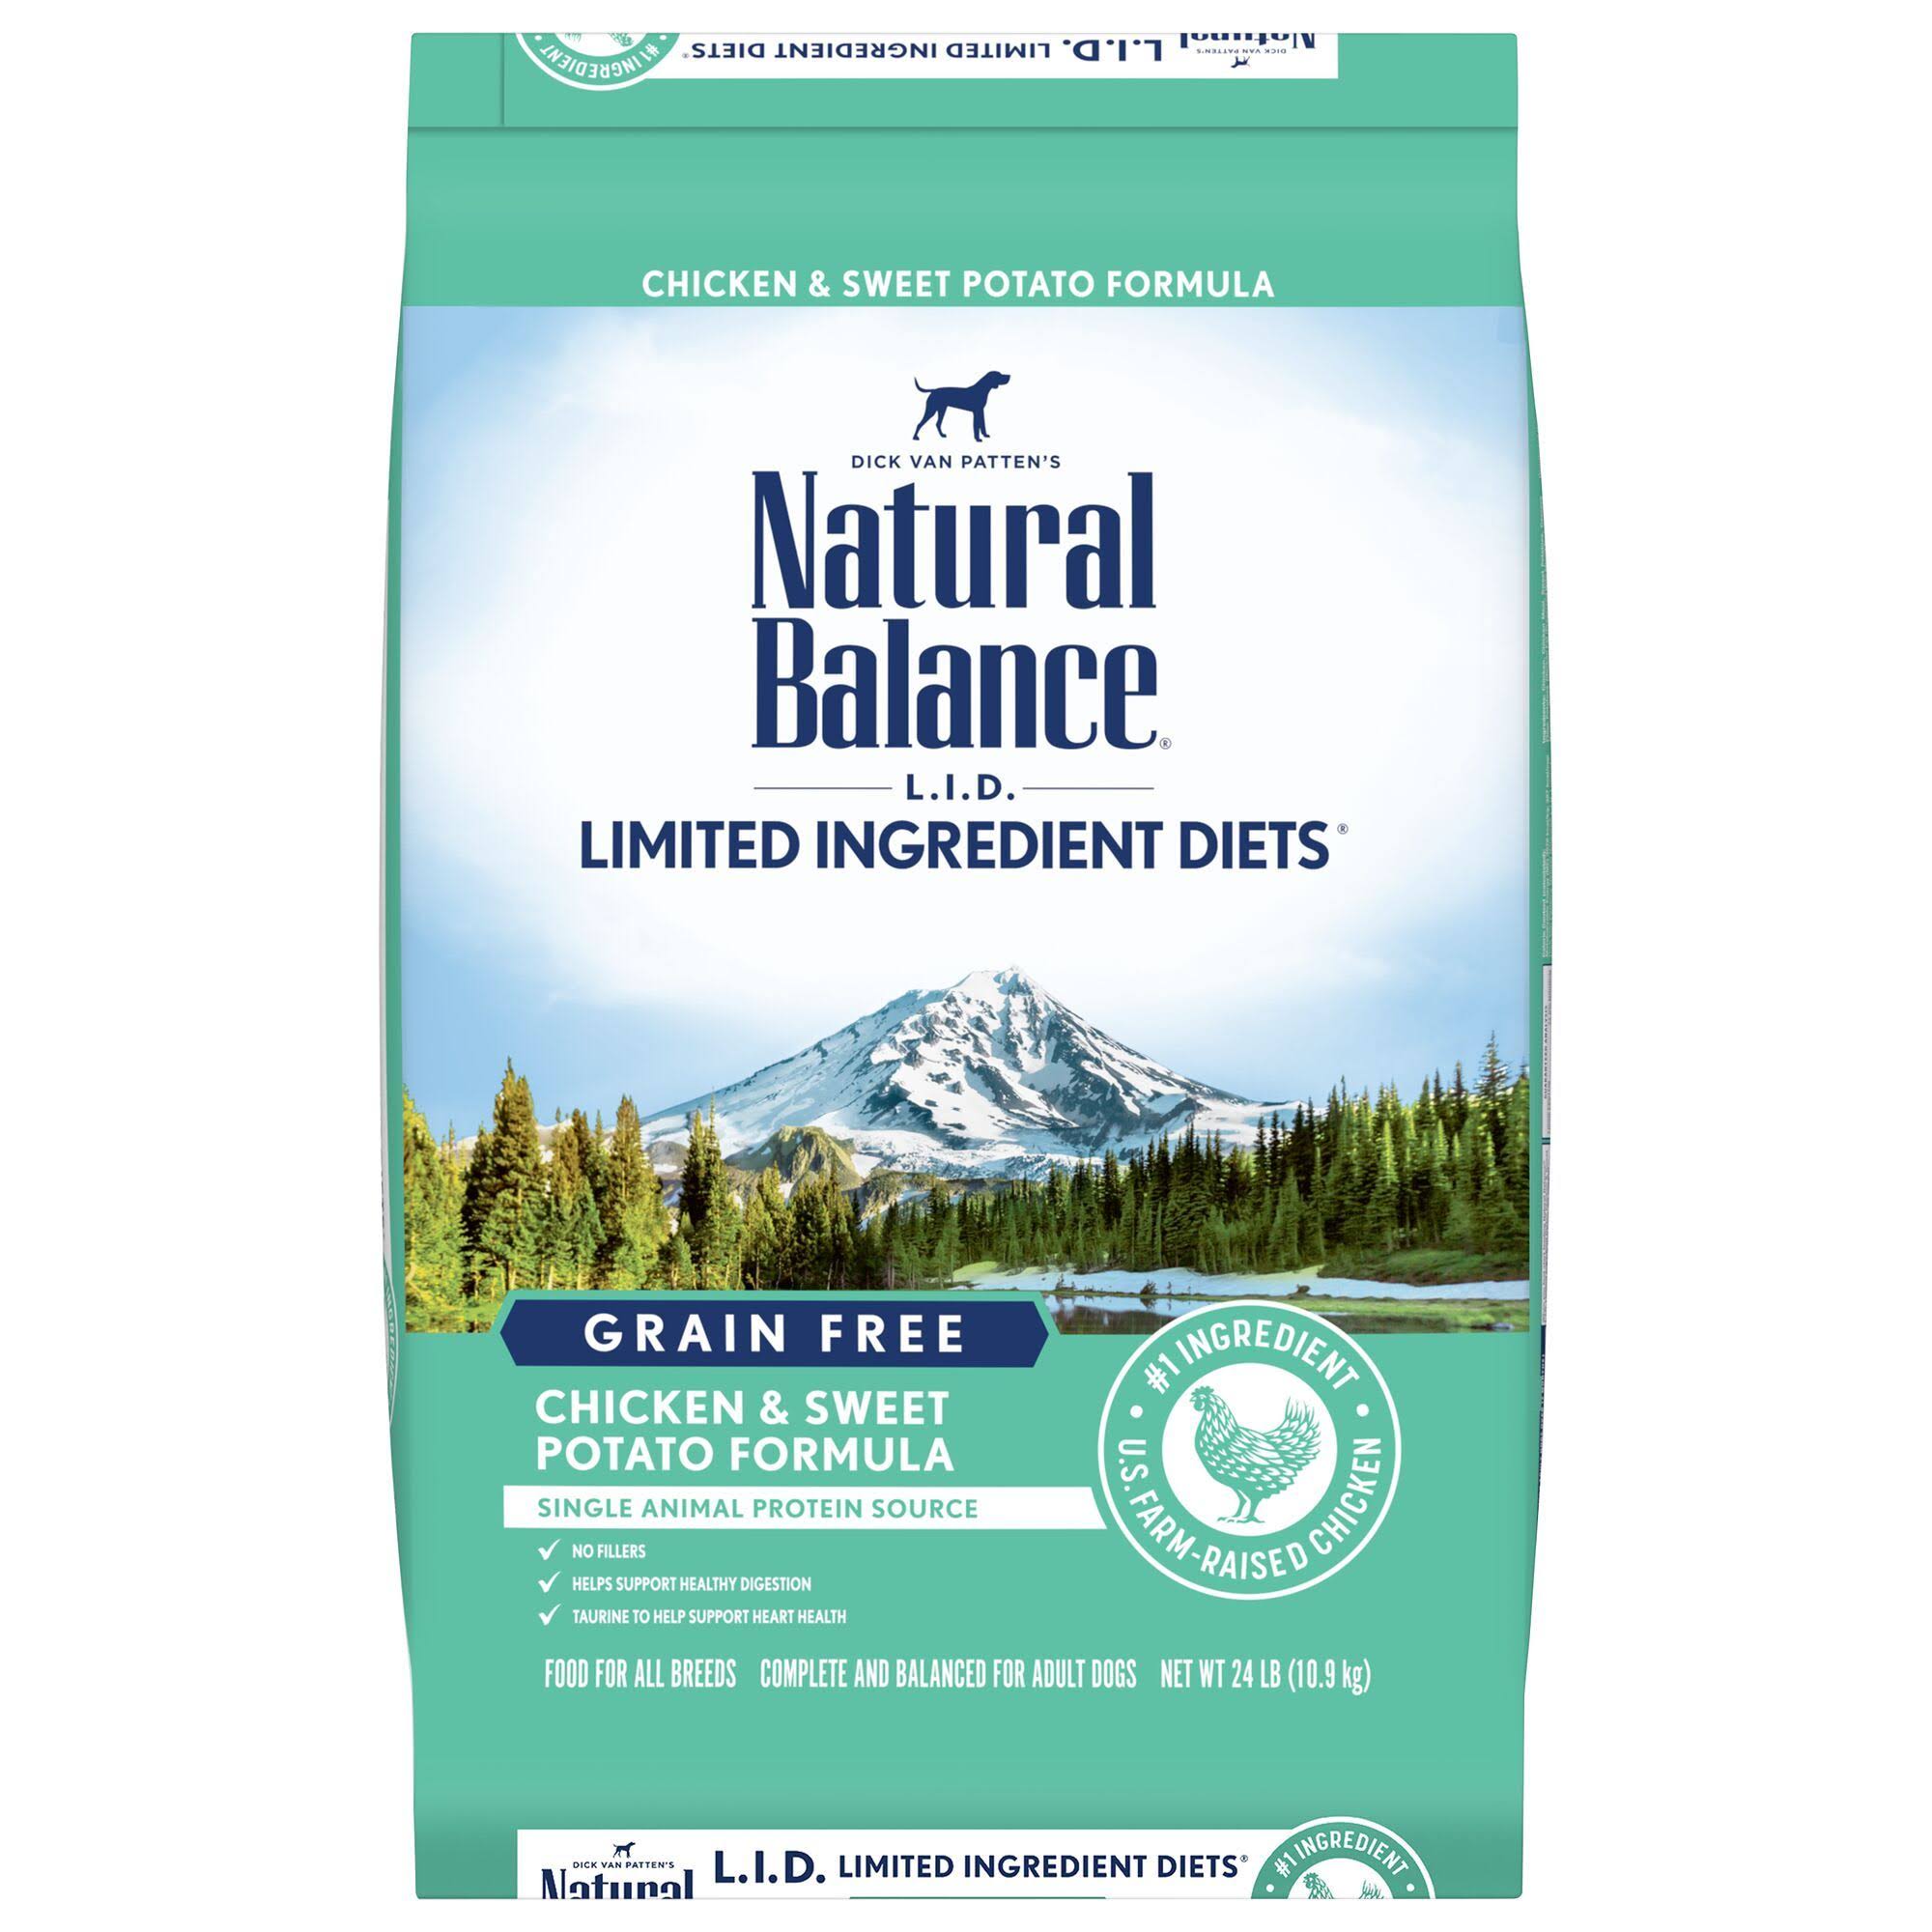 Natural Balance Limited Ingredients Diets Dog Food, Chicken & Sweet Potato Formula, Grain Free - 24 lb